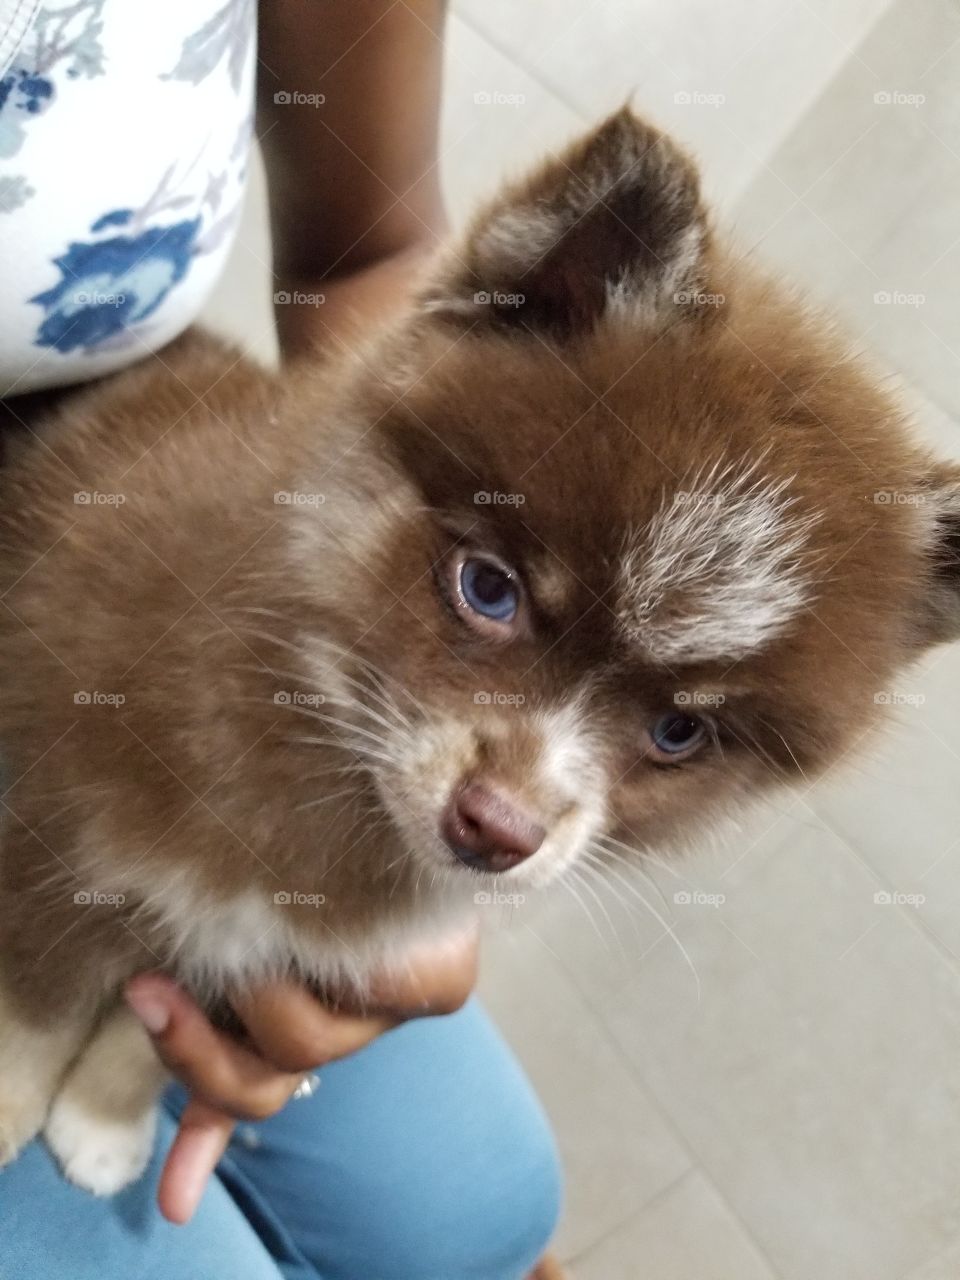 blue eyed husky puppy, sitting happy puppy, blue eyes, brown and white puppy, calm puppy